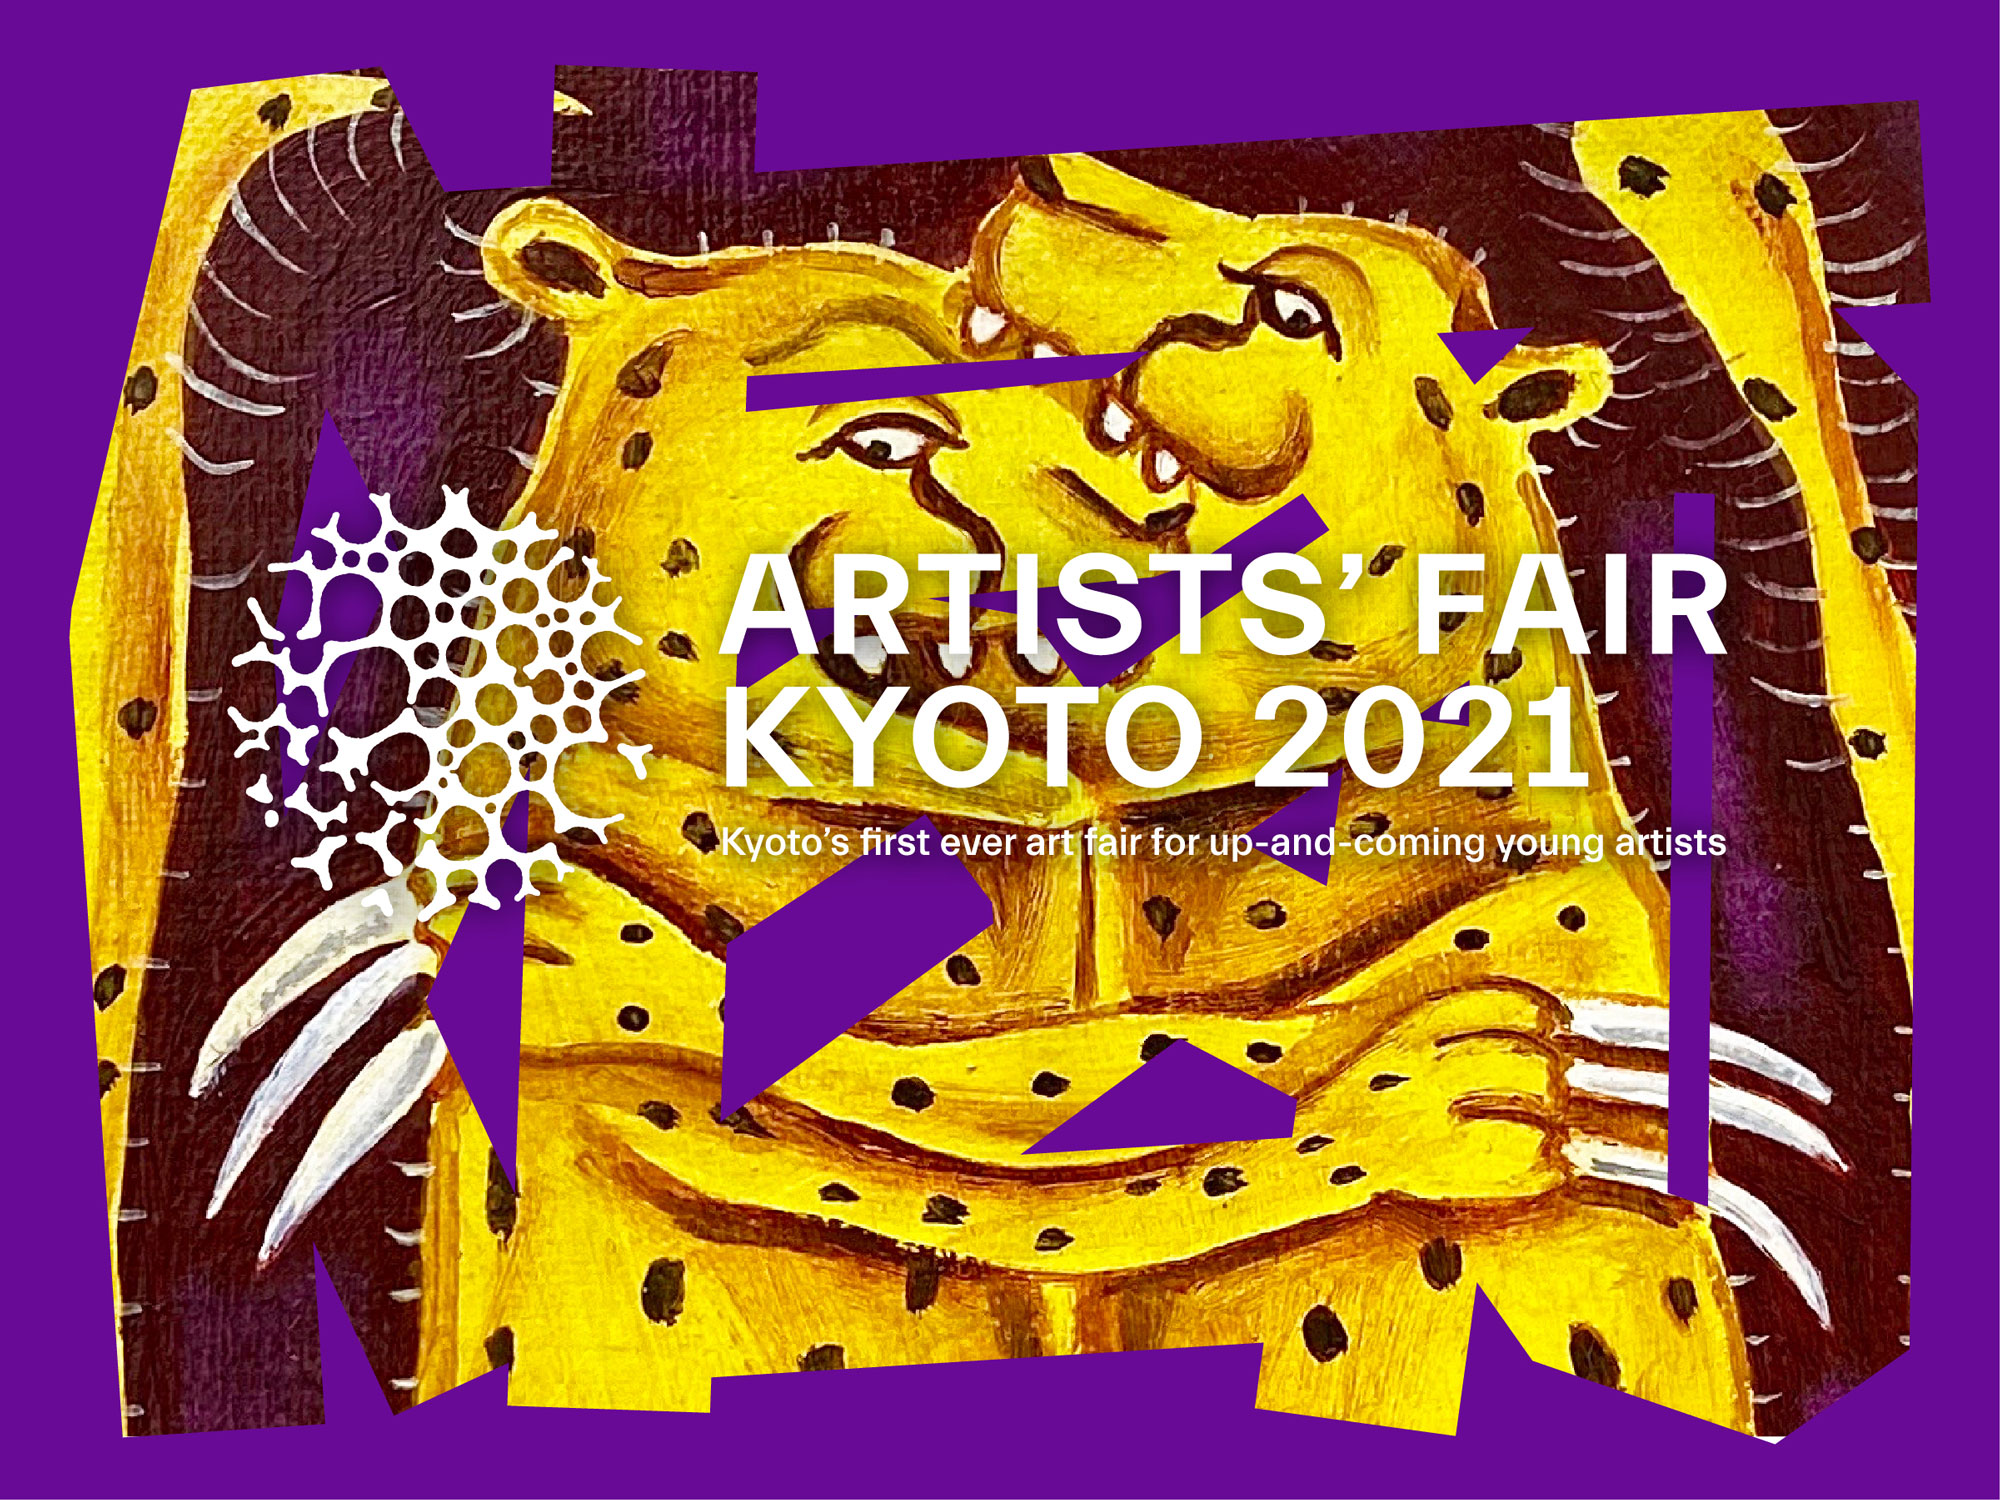 ARTISTS' FAIR KYOTO 2021